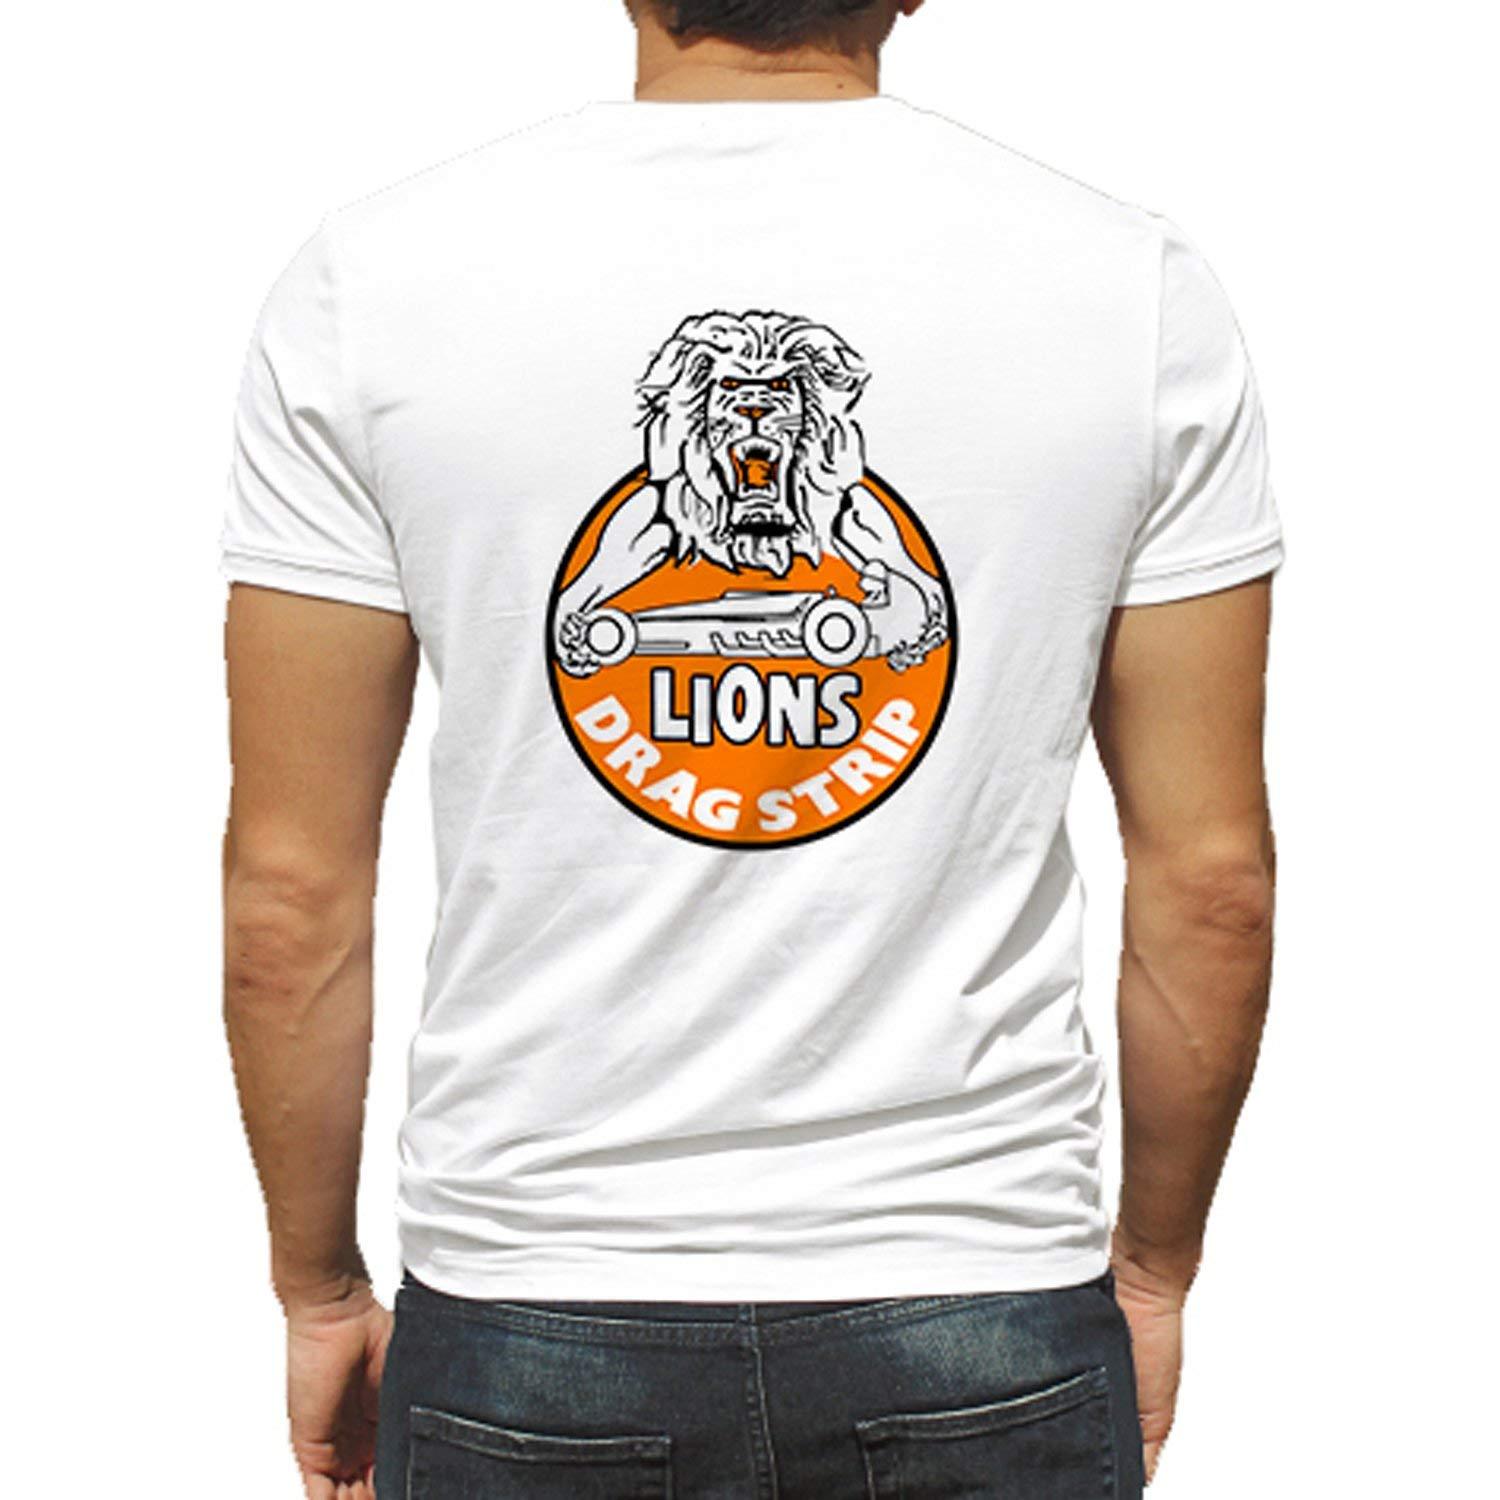 White and Orange Lion Logo - Lions Drag Strip Orange Lion'S Arms Hot Rod Rat Nostalgia Drag Race